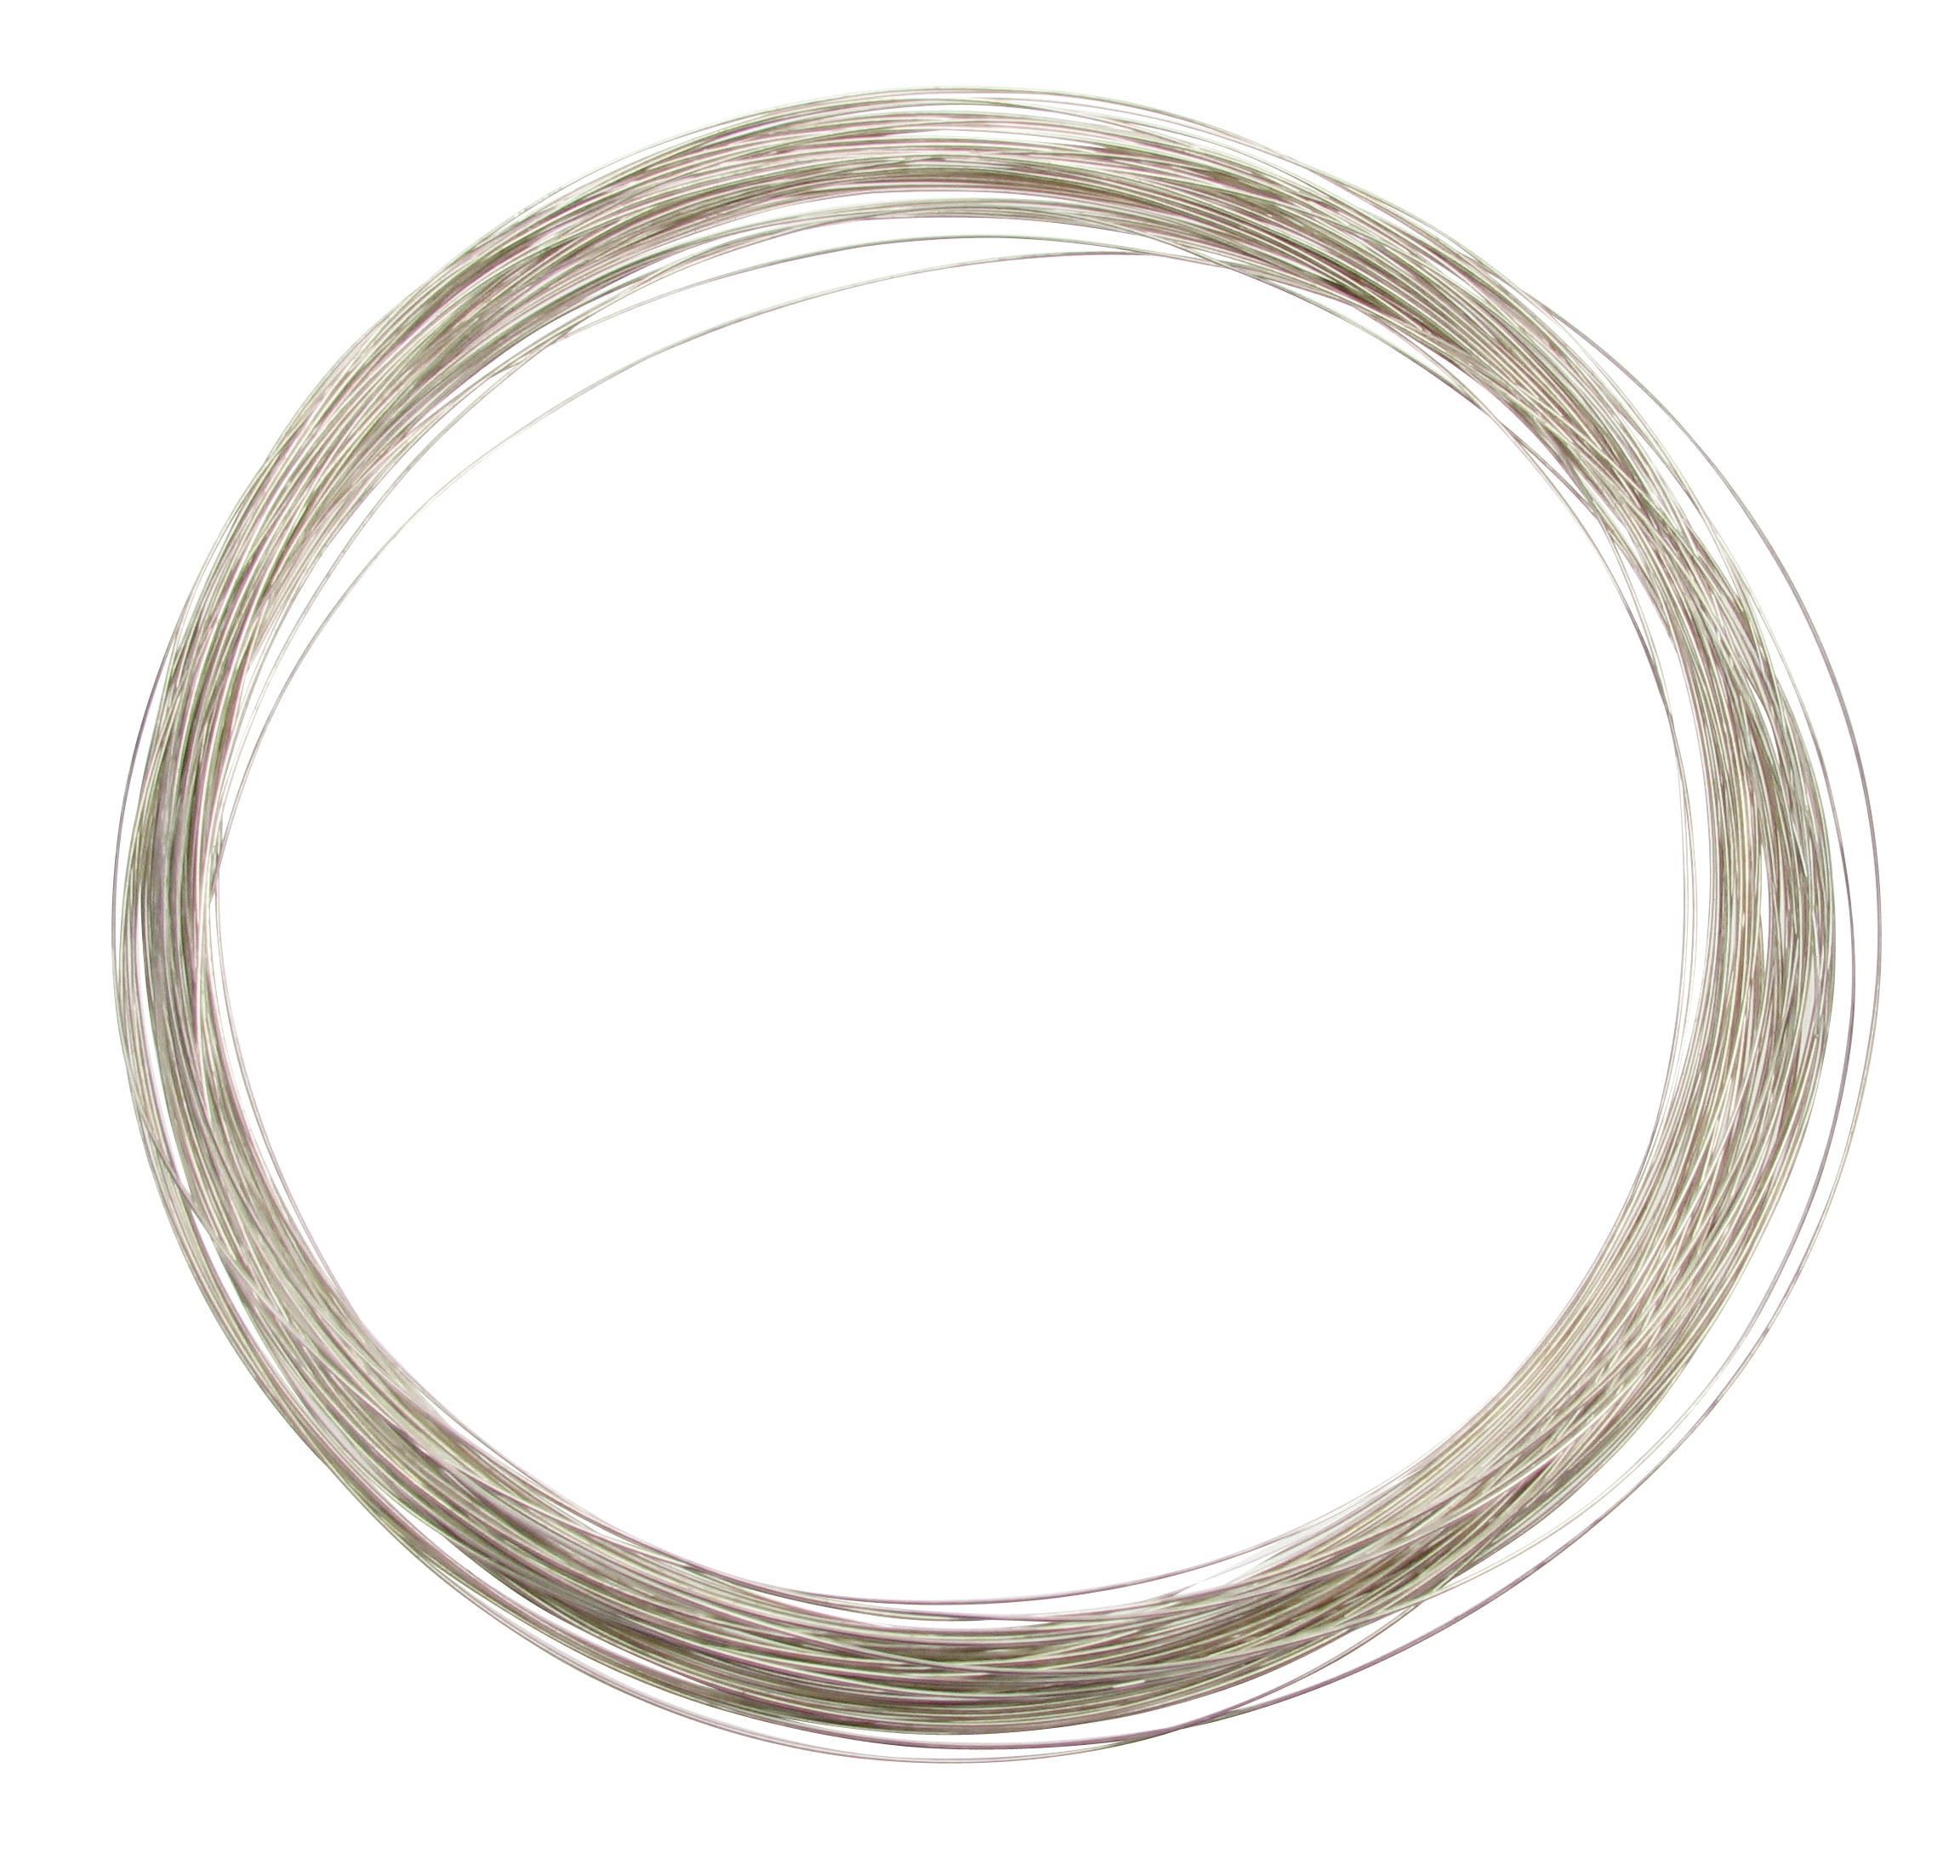 Welding wire for steel, e.g., springs